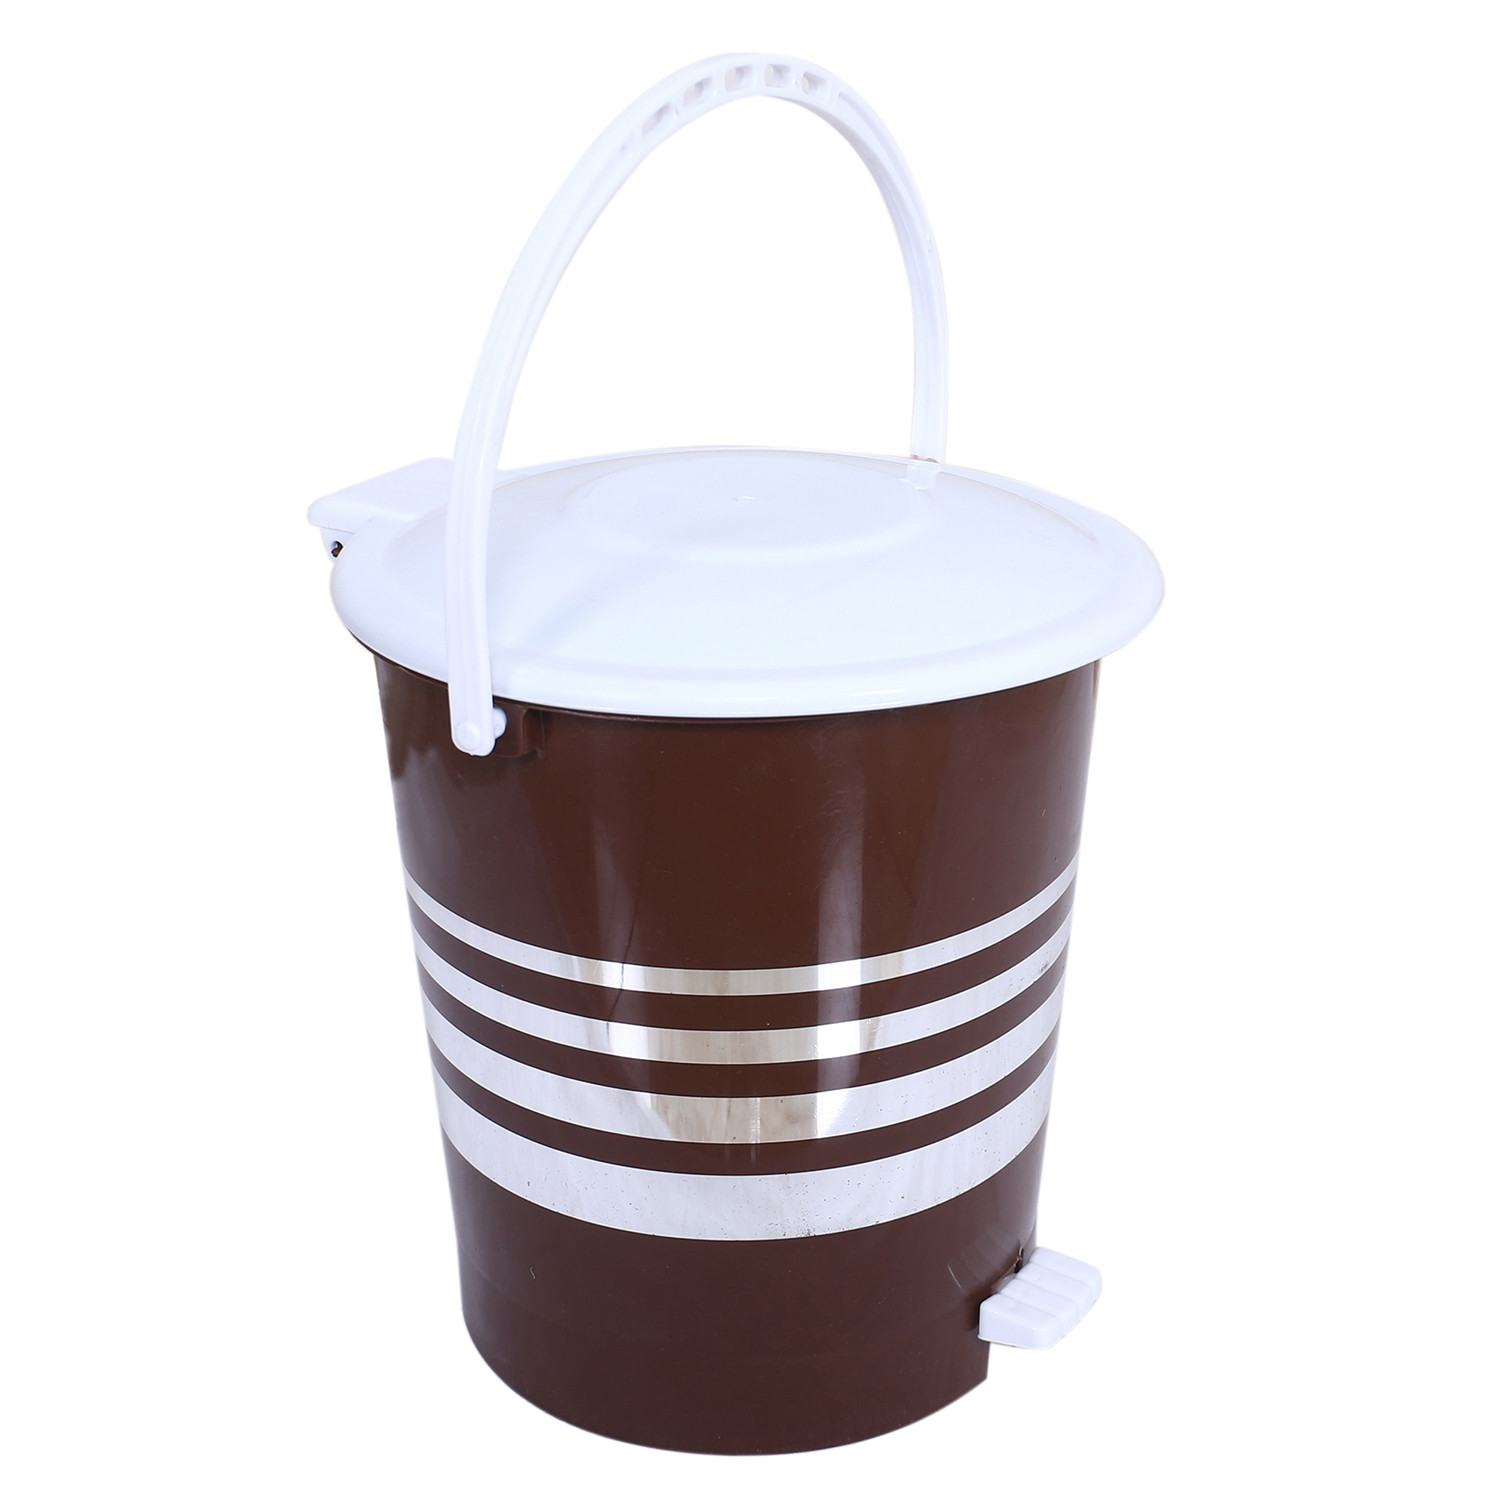 Kuber Industries Dustbin|Plastic Pedal Dustbin|Kitchen Inner Bucket Waste Paper Bin|Dustbin For Bedroom|Silver & Gold Layer 10 Litre Dustbin|Pack of 2 (Brown)